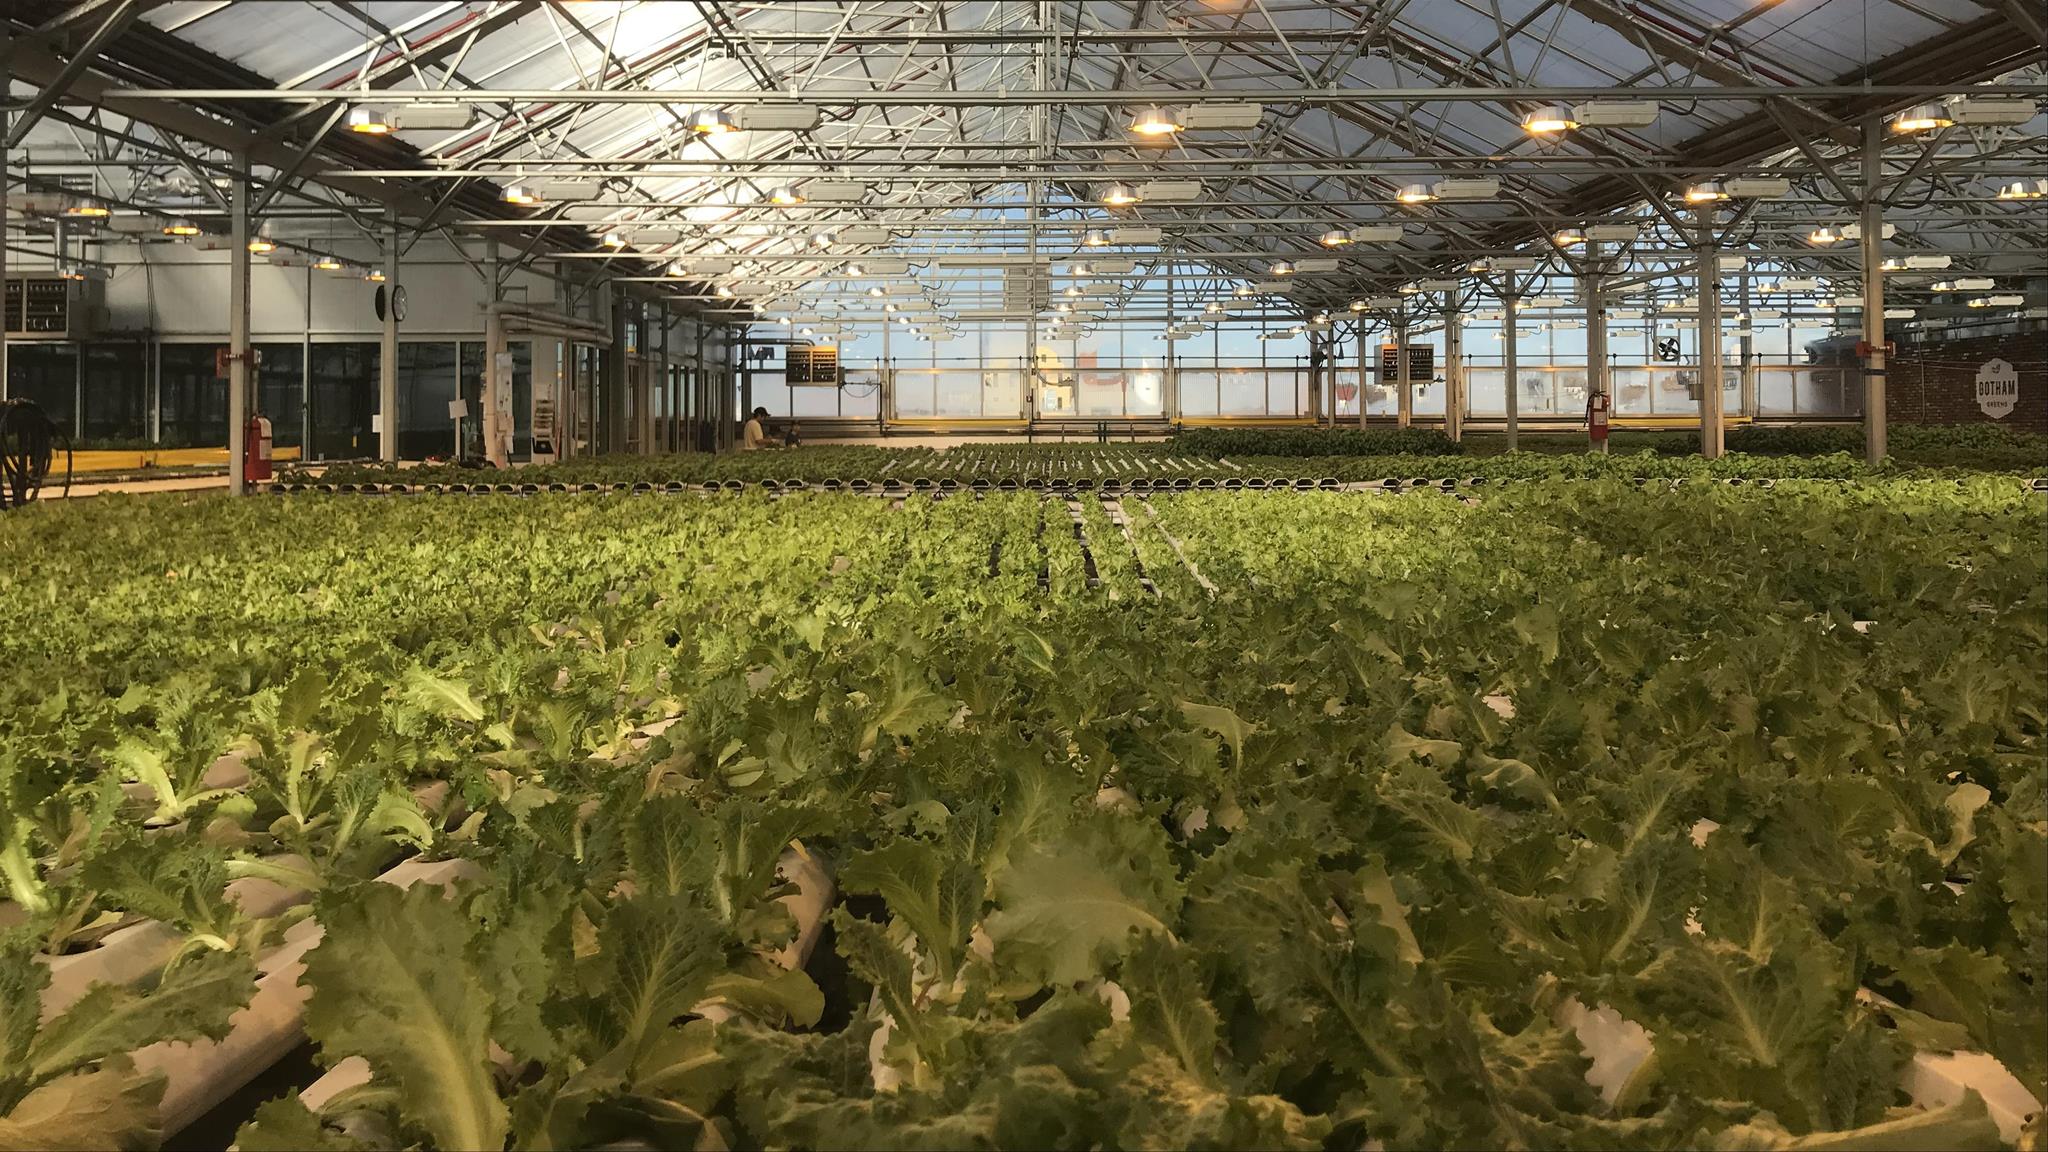 120375_Lettuce-fields-on-Gotham-Green-growth-floor.jpg